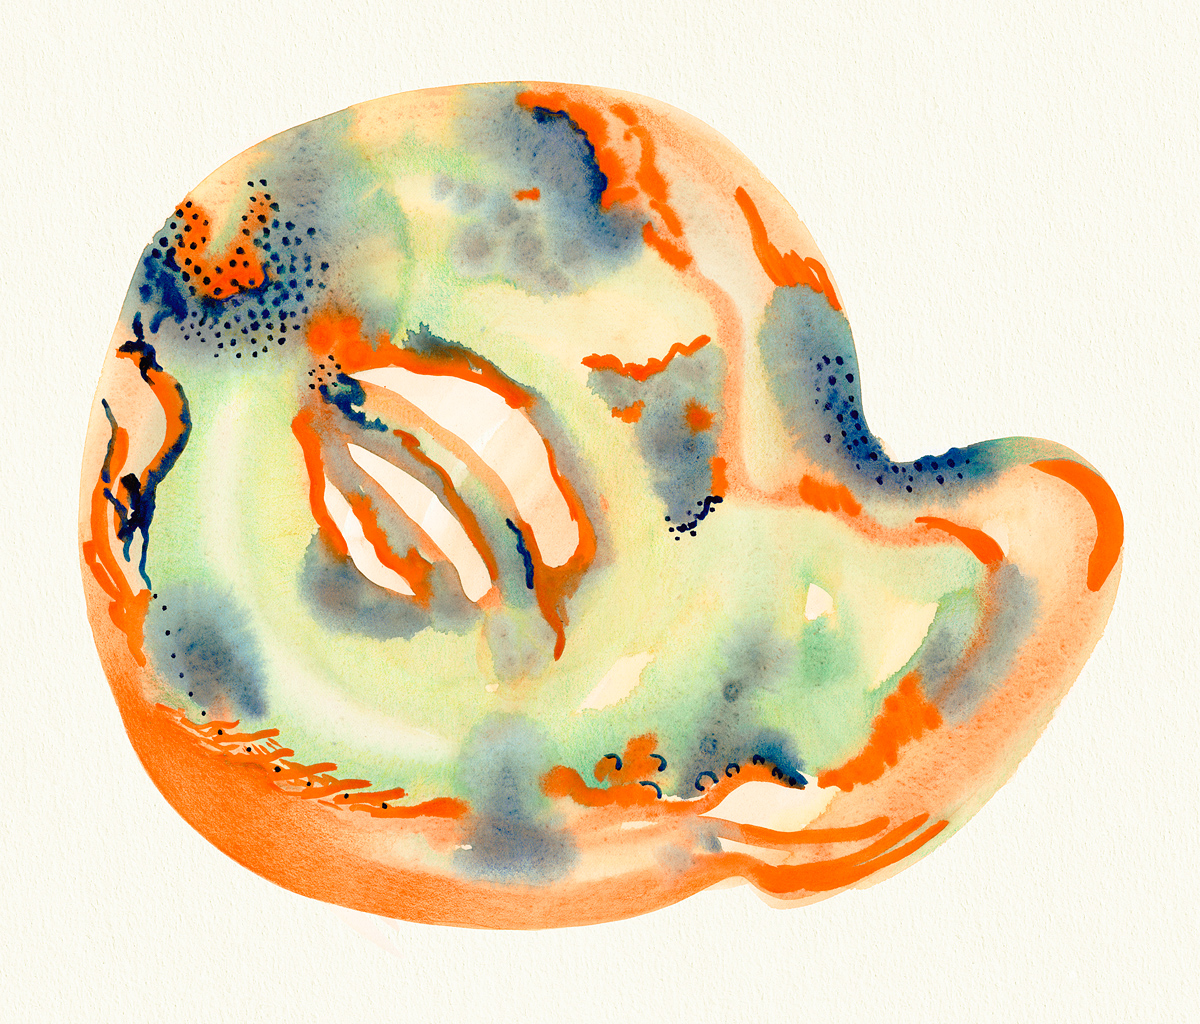 Cantaloupe Dreams, abstract biomorphic watercolor landscape